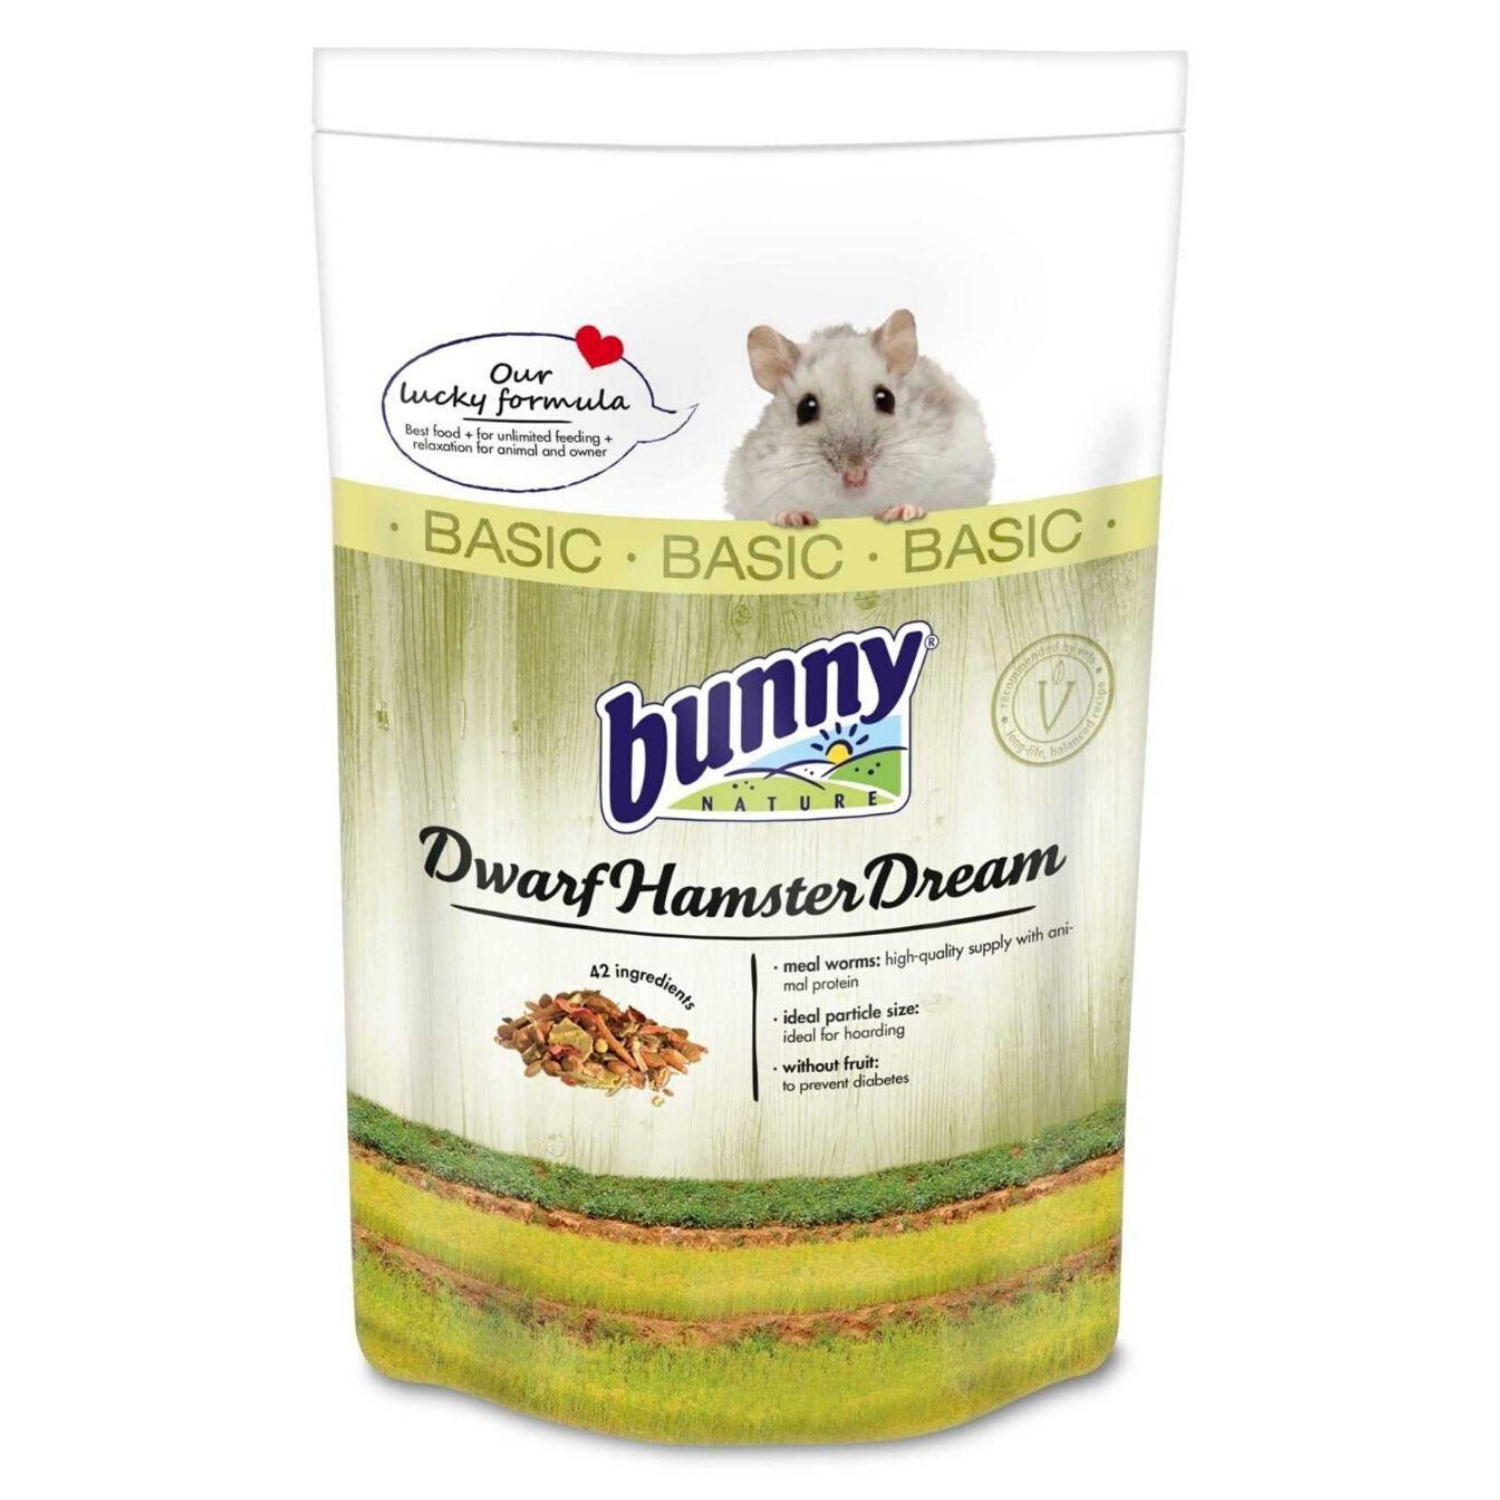 Bunny Nature Dwarf Hamster Dream Basic - 600g